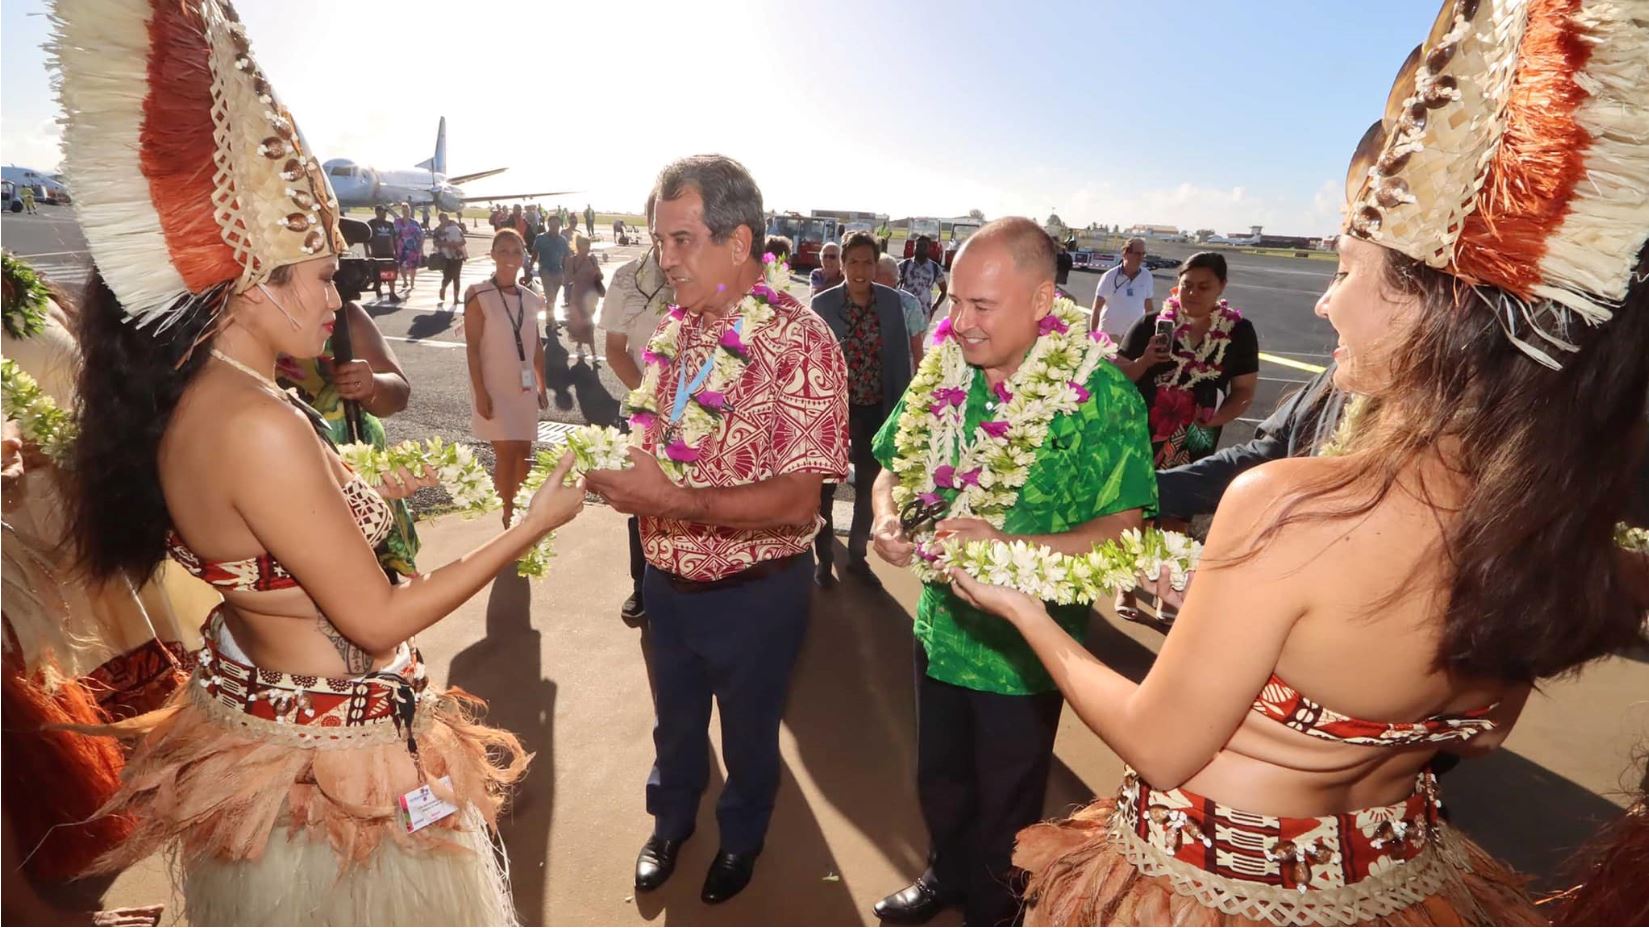 Rarotonga-Papeete flights ‘will boost tourism’